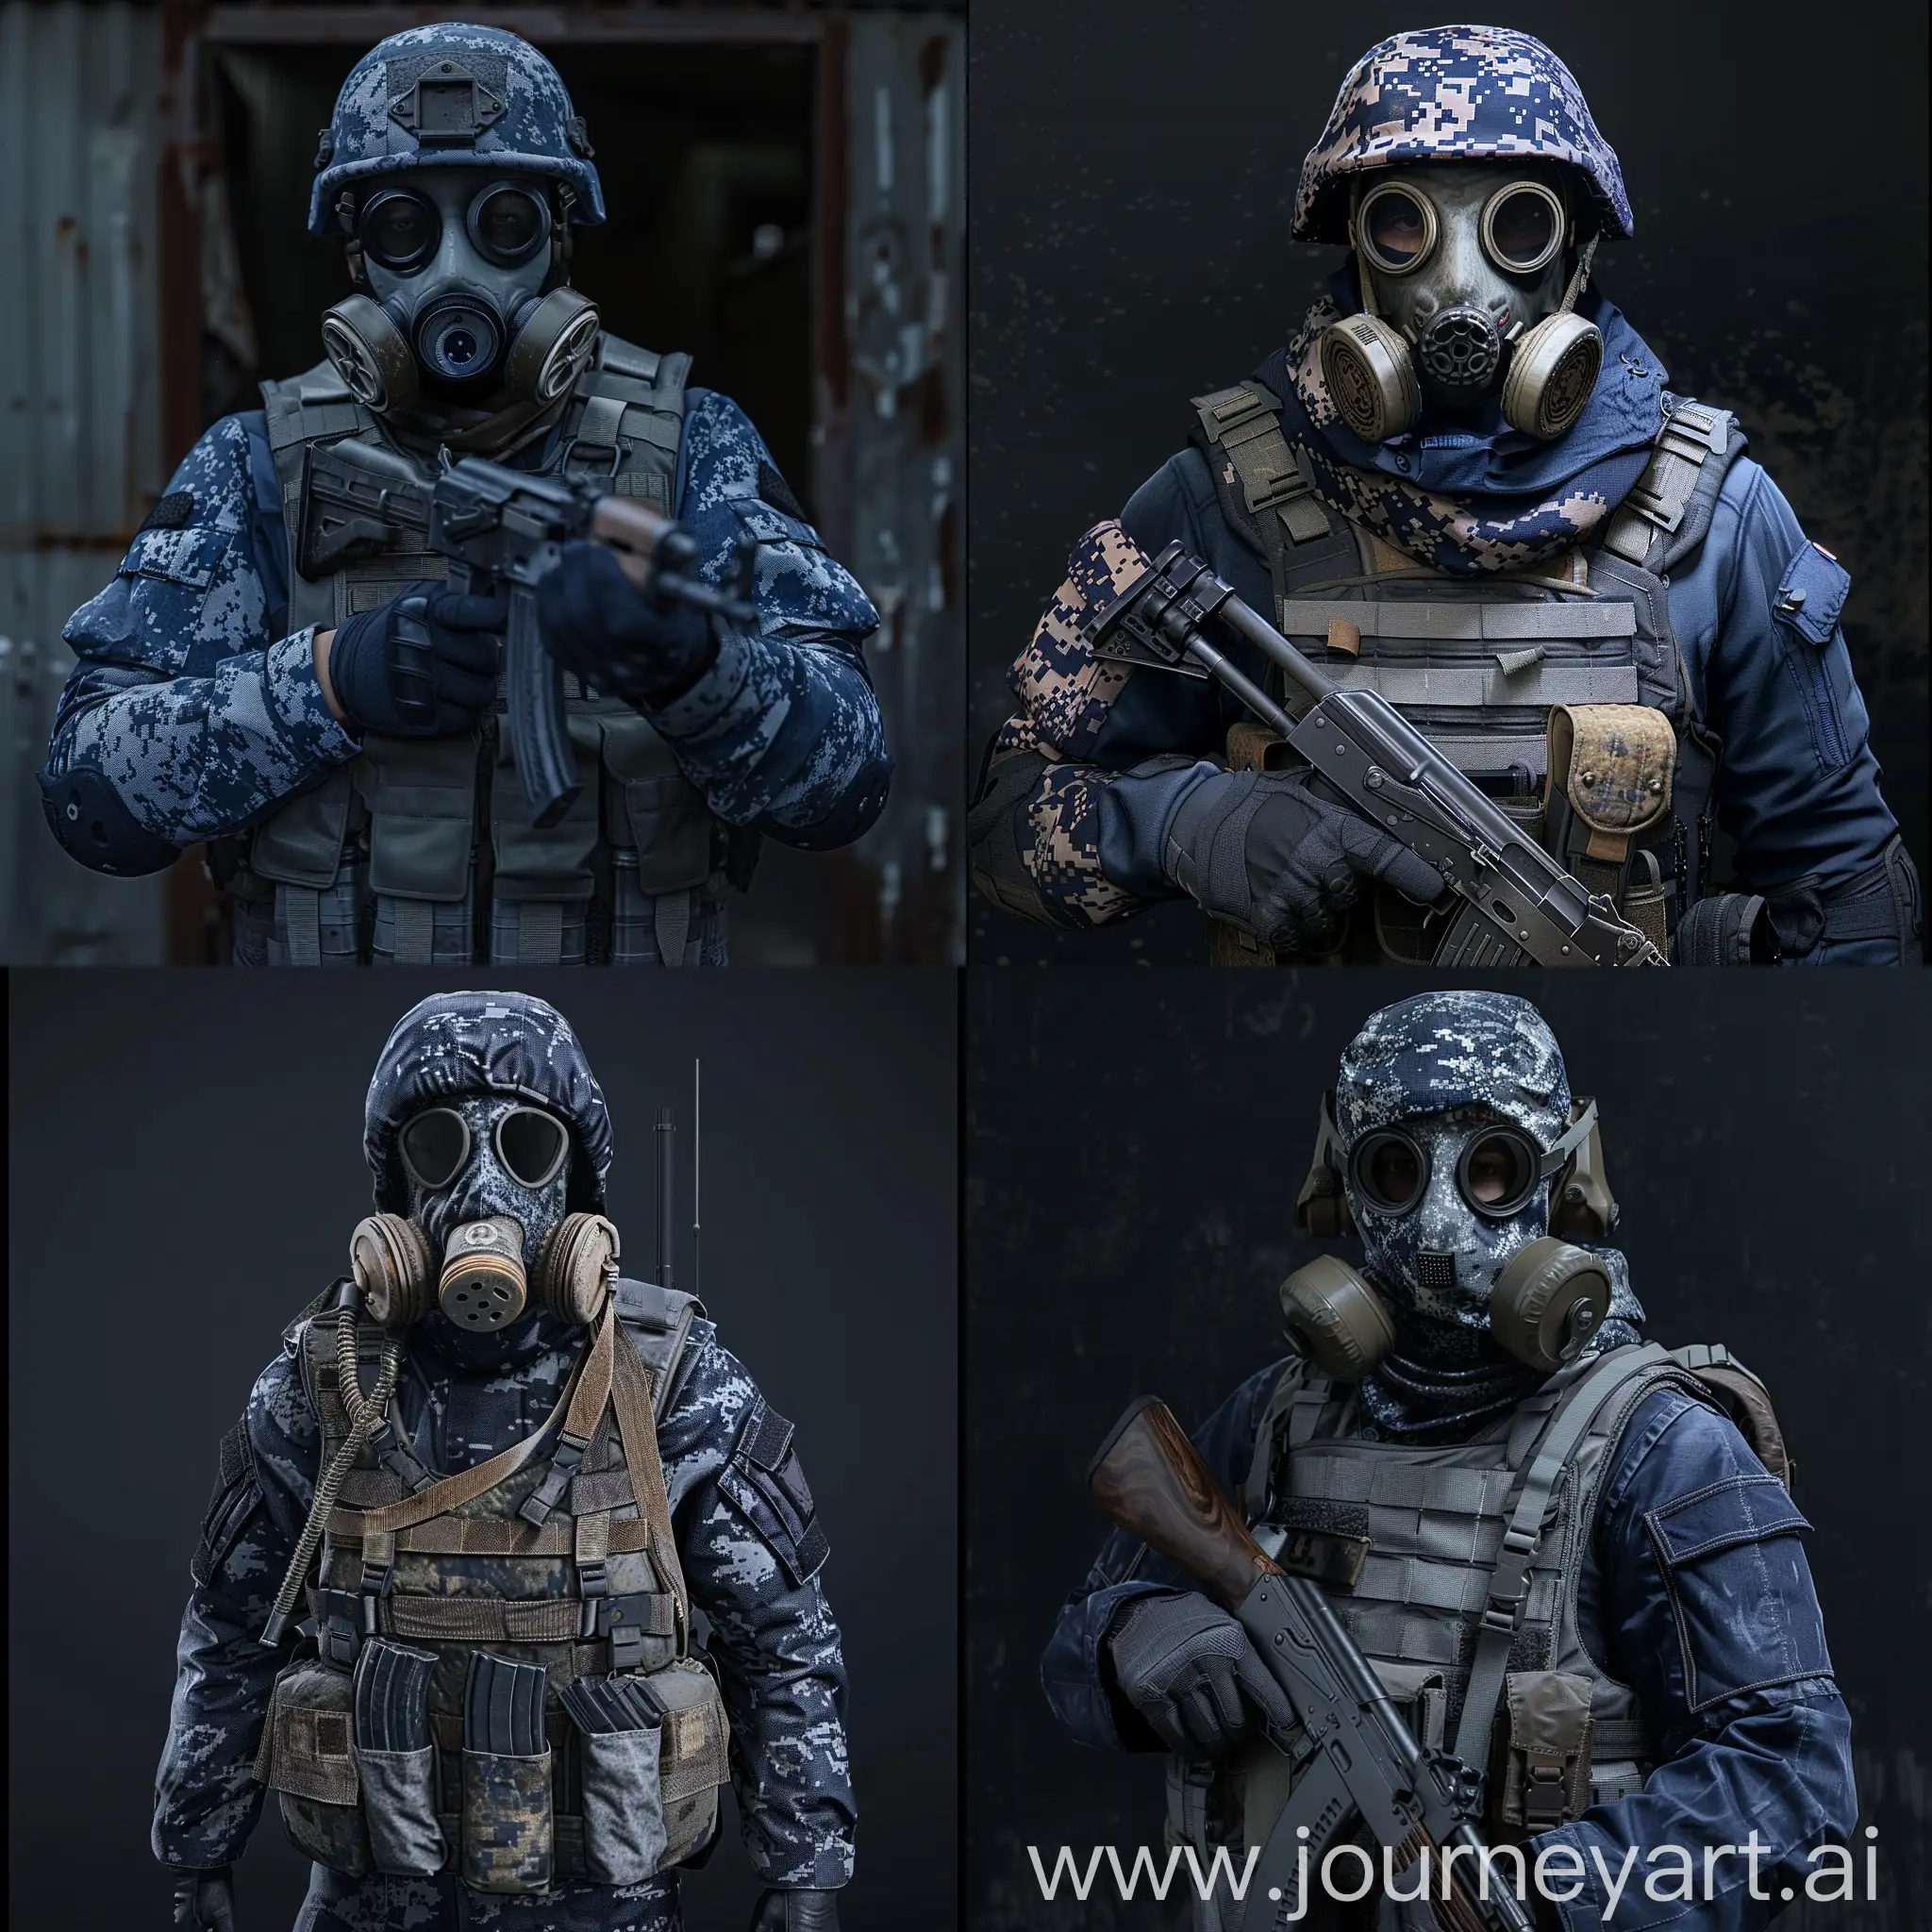 SovietEra-Stalker-Mercenaries-in-Camouflage-Uniform-with-Vintage-Weapons